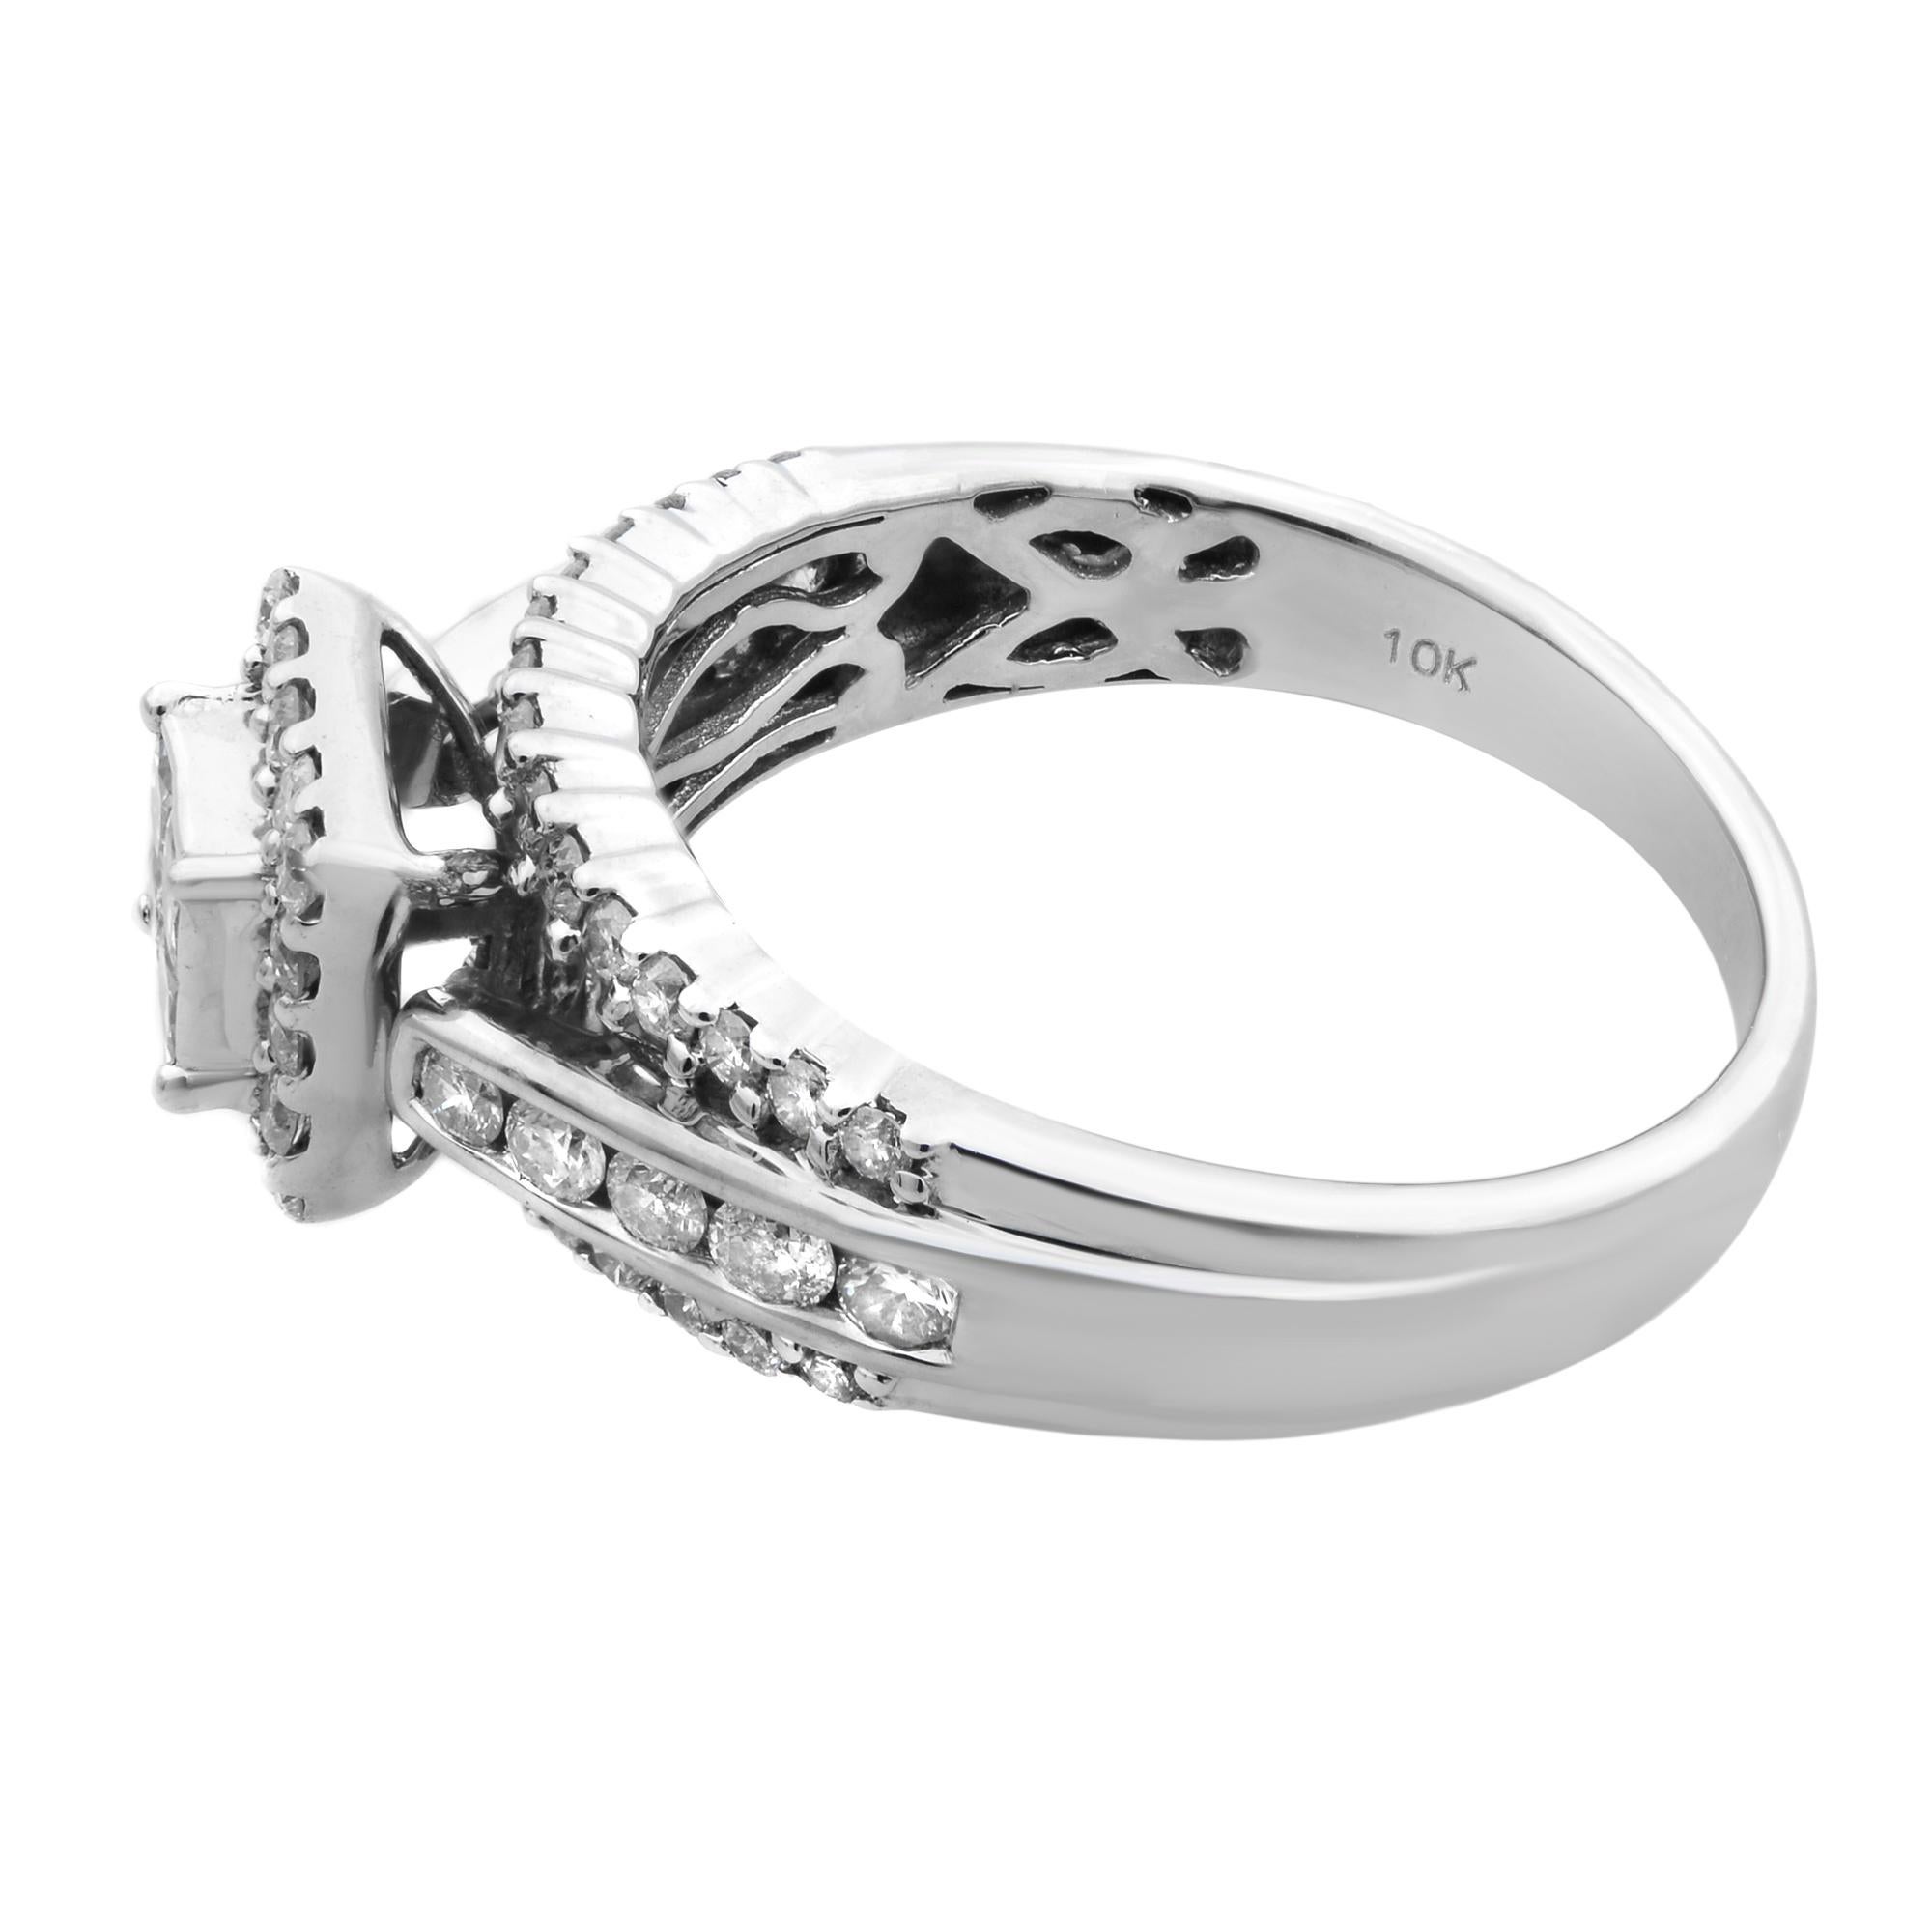 Round Cut Rachel Koen Diamond Ladies Wedding Ring 14K White Gold 1.25cttw For Sale